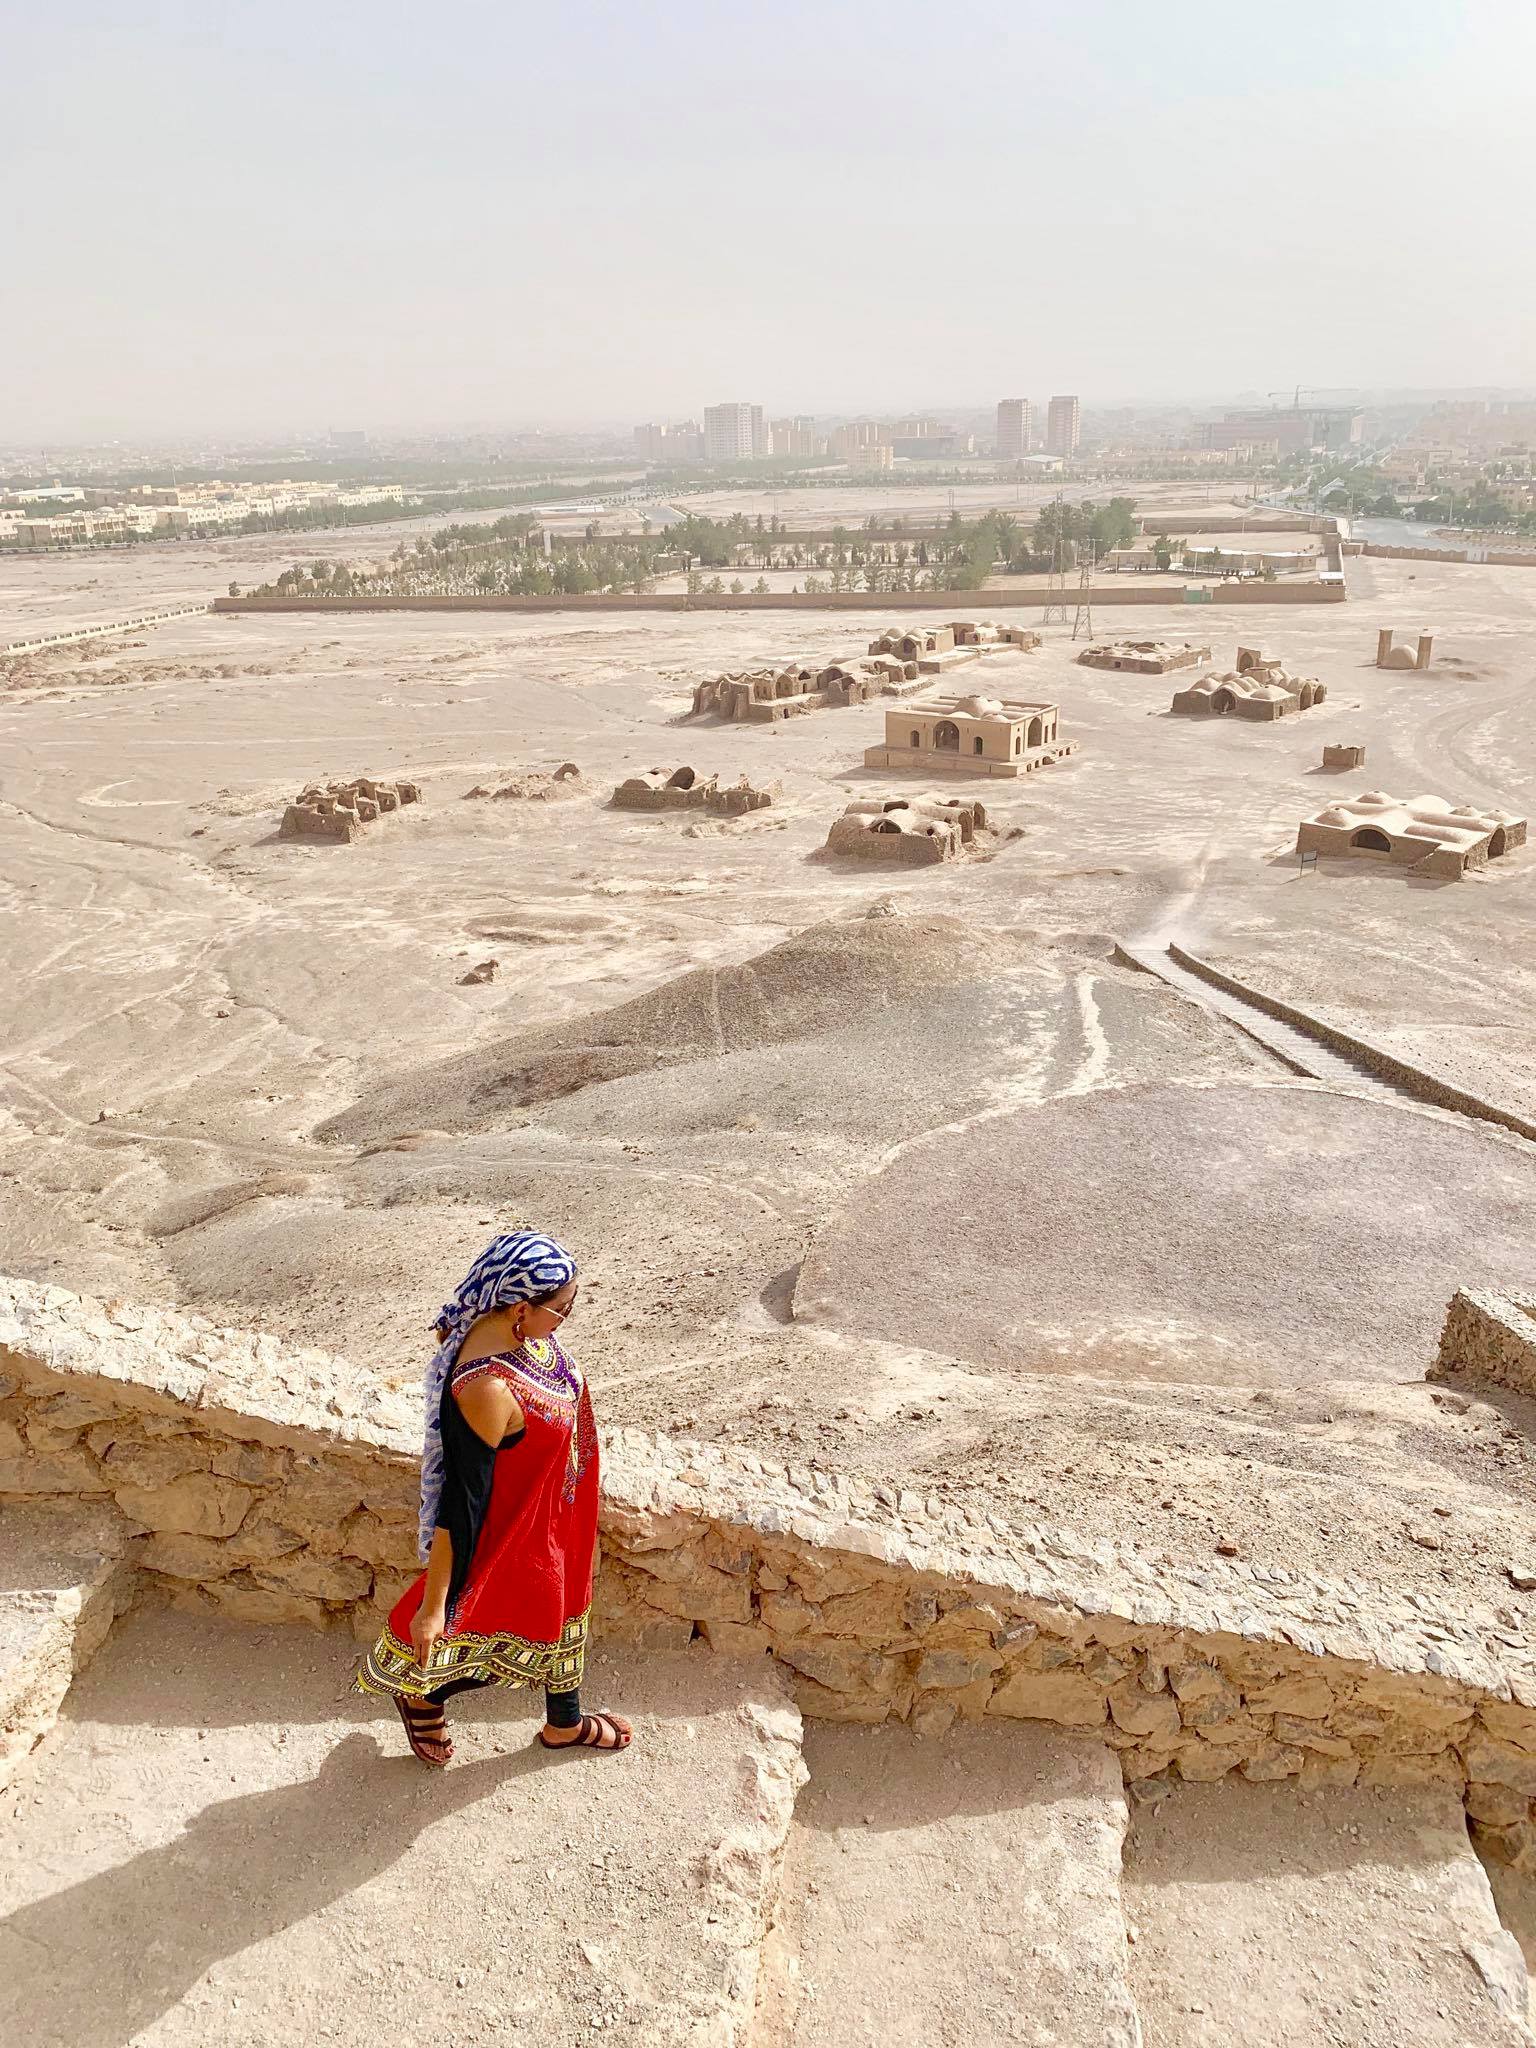 Kach Solo Travels in 2019 YAZD - the desert city in Iran2.jpg